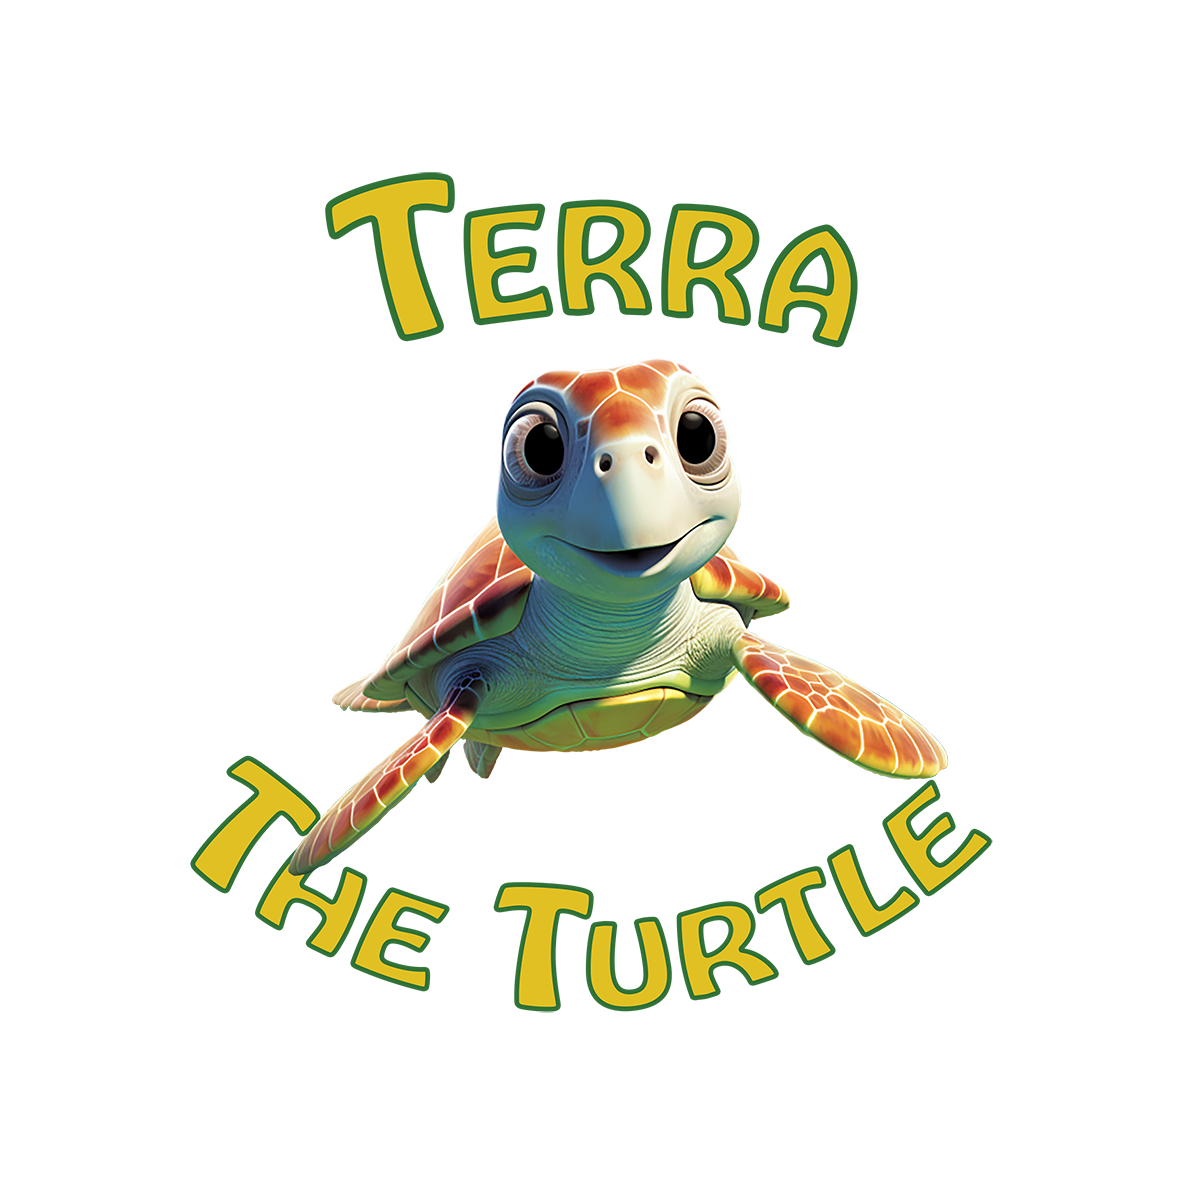 The Terra the Turtle logo